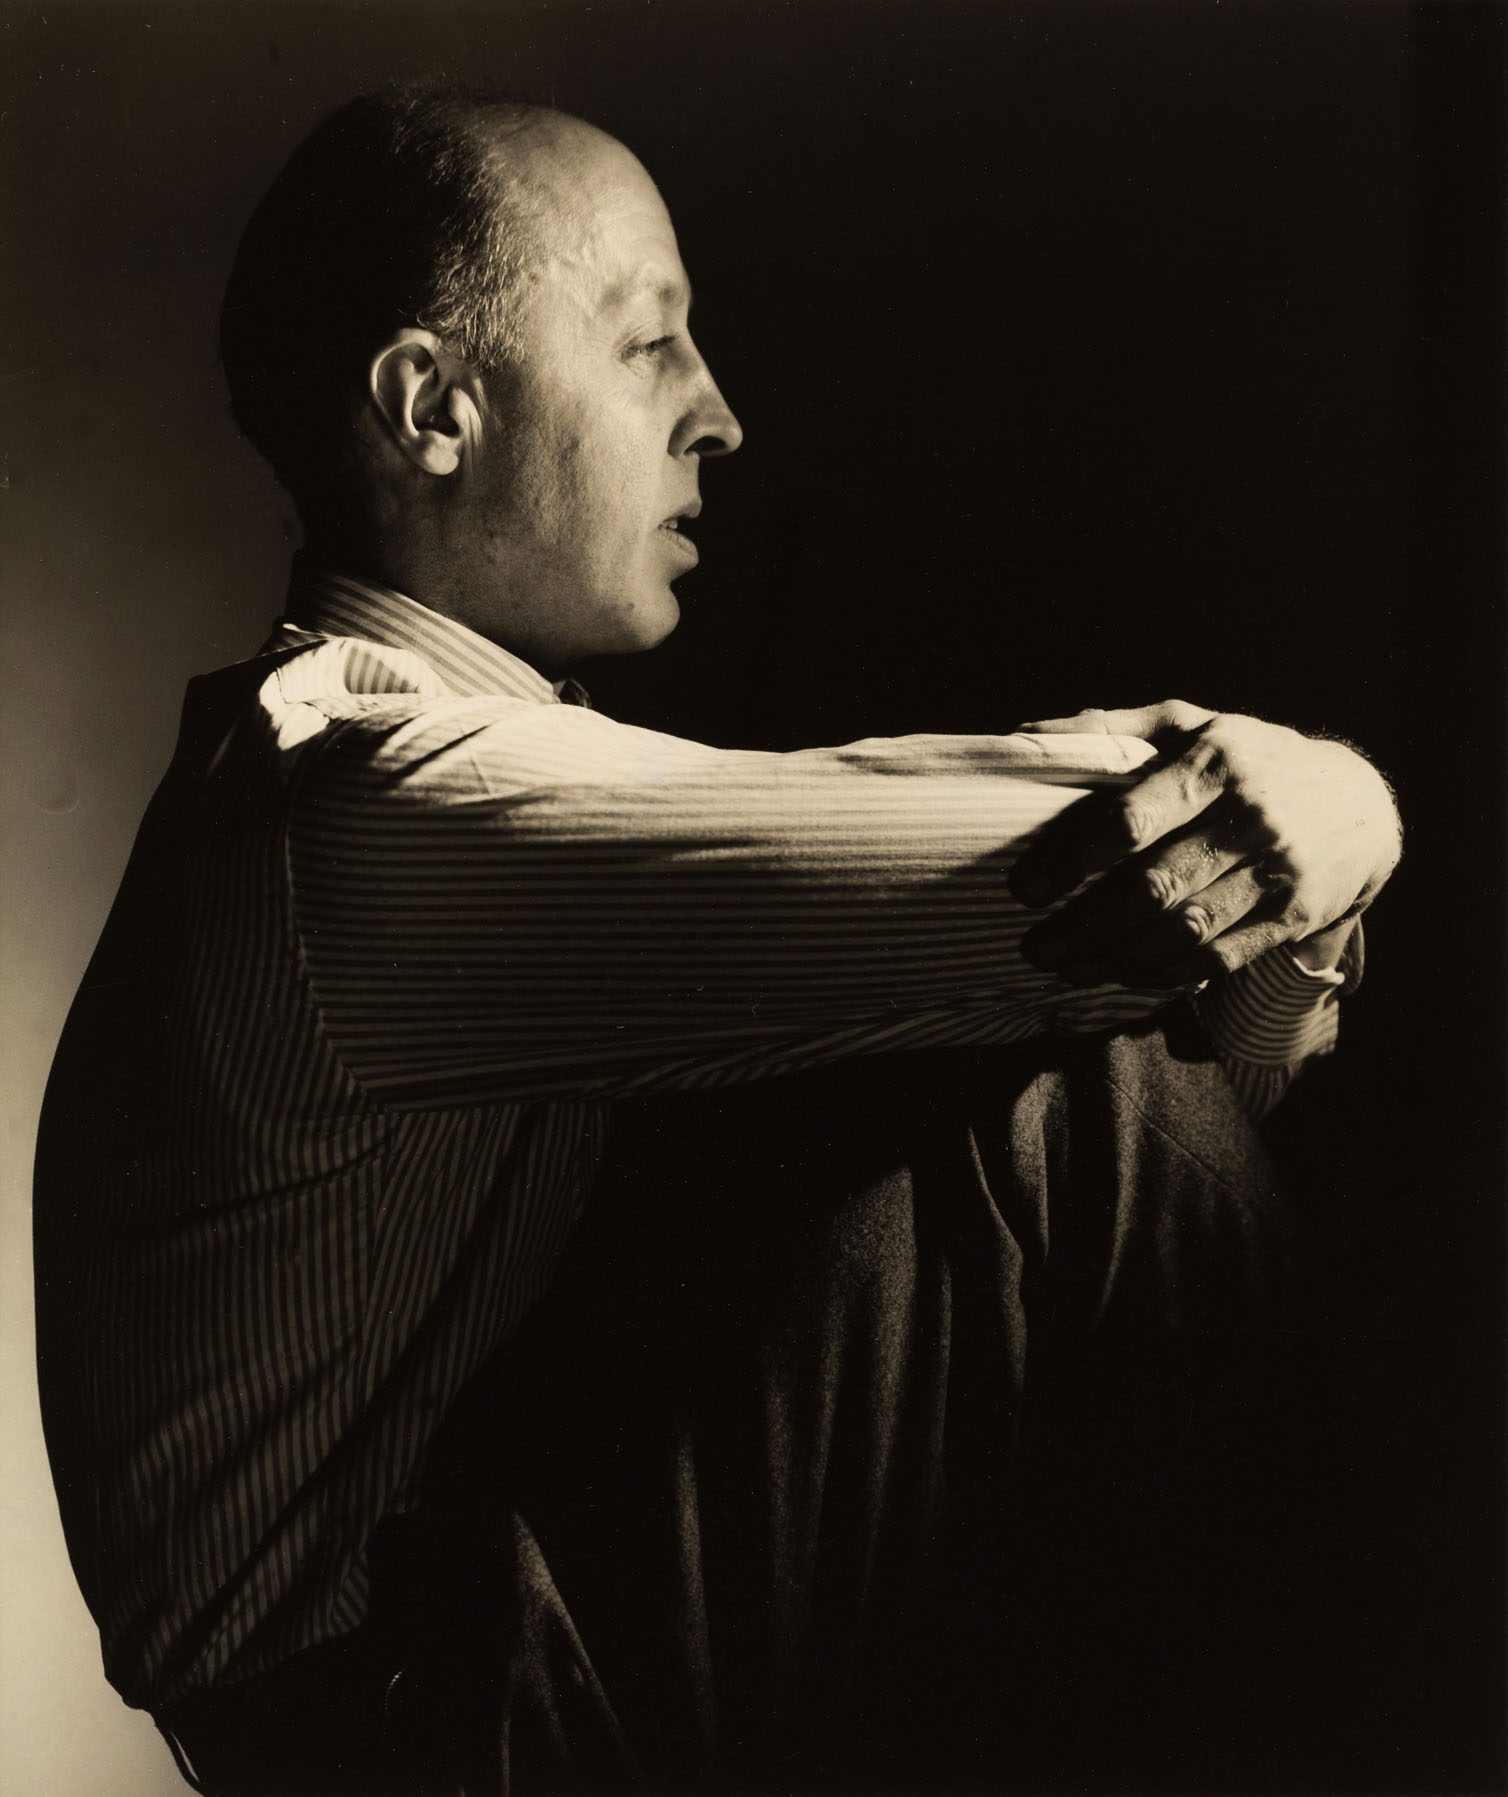 George Hoyningen-Huene fotografiert von Horst P. Horst